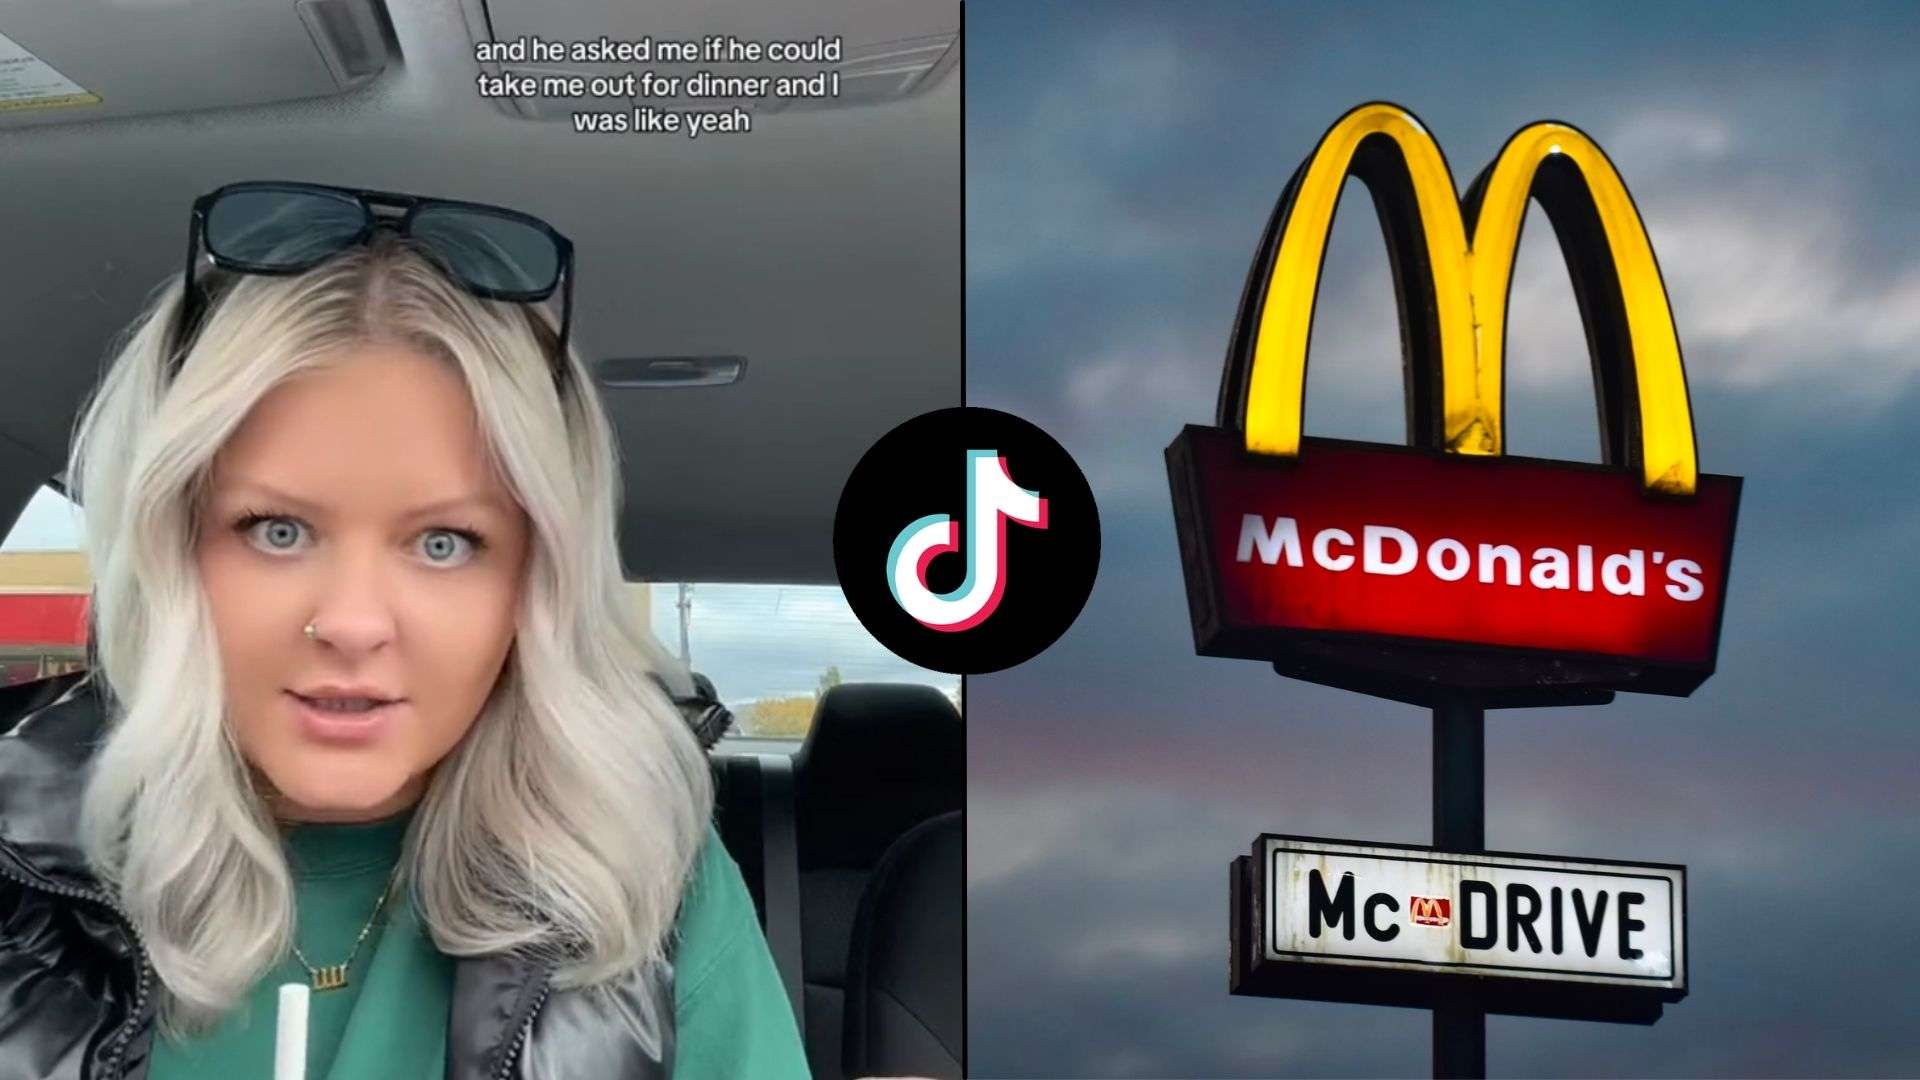 WOman sat in car in green jumper talking to jumper next to McDonalds logo